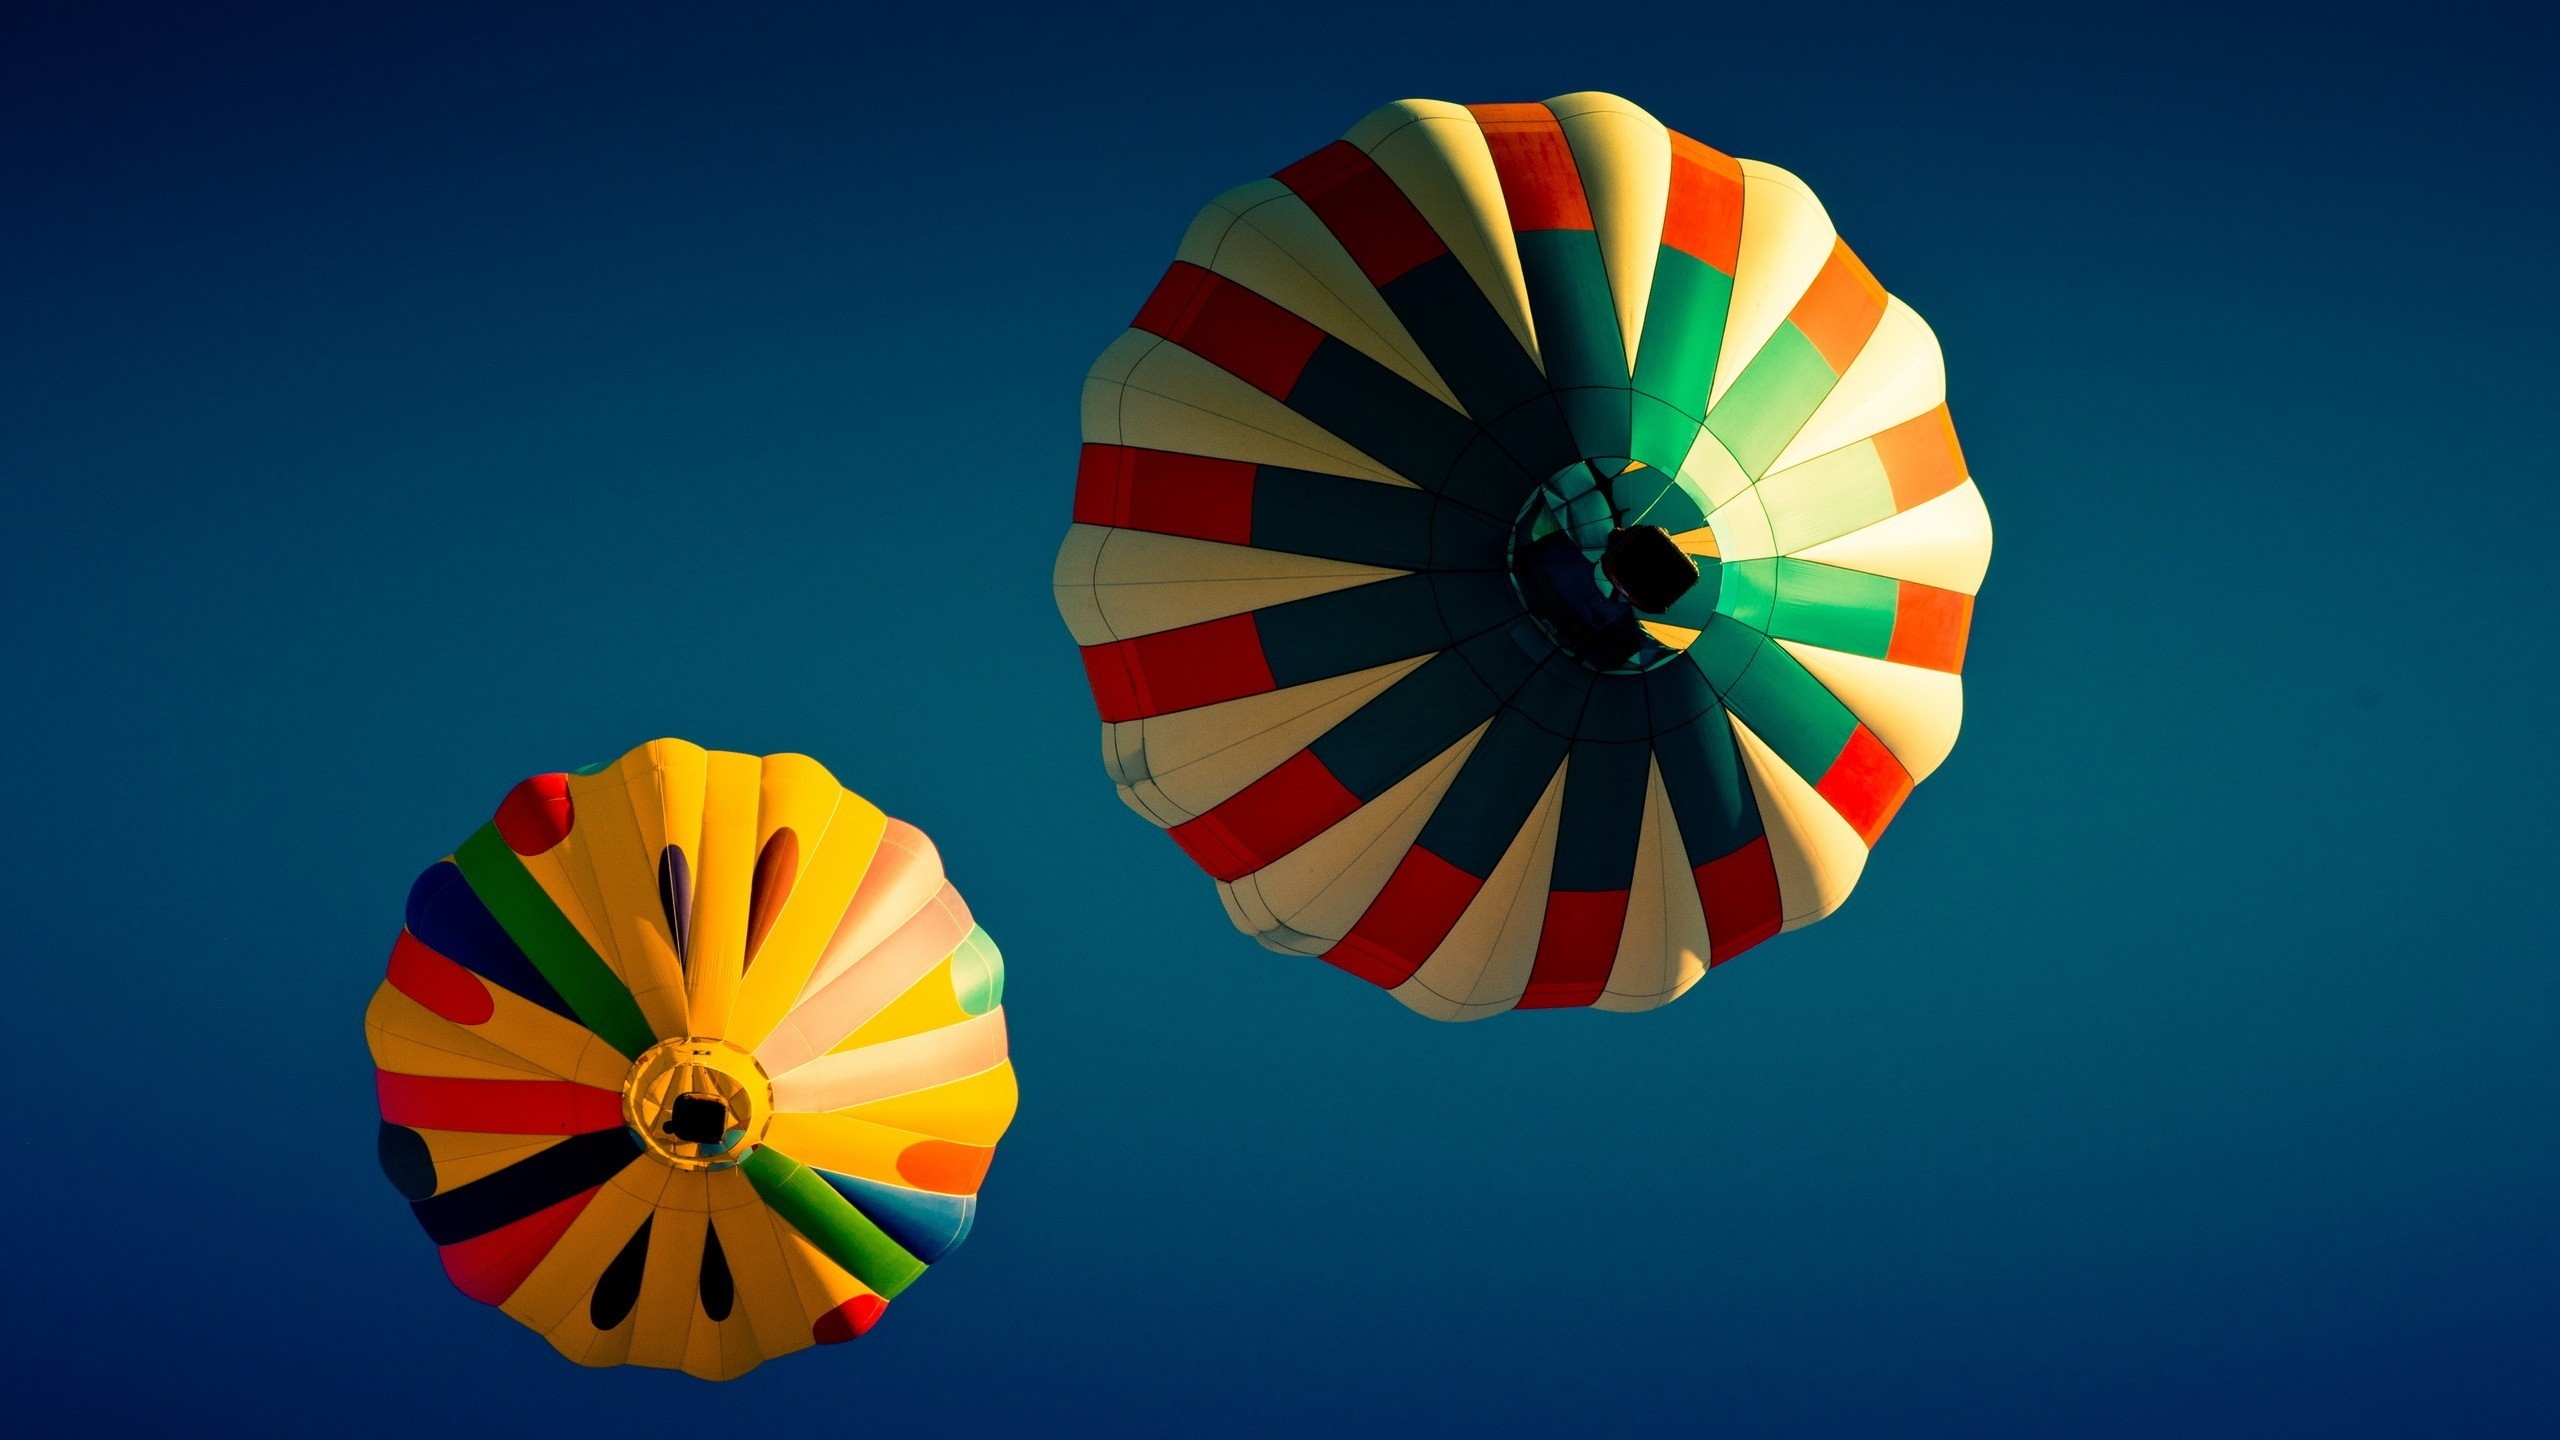 Hot Air Balloon Ride for 2560x1440 HDTV resolution